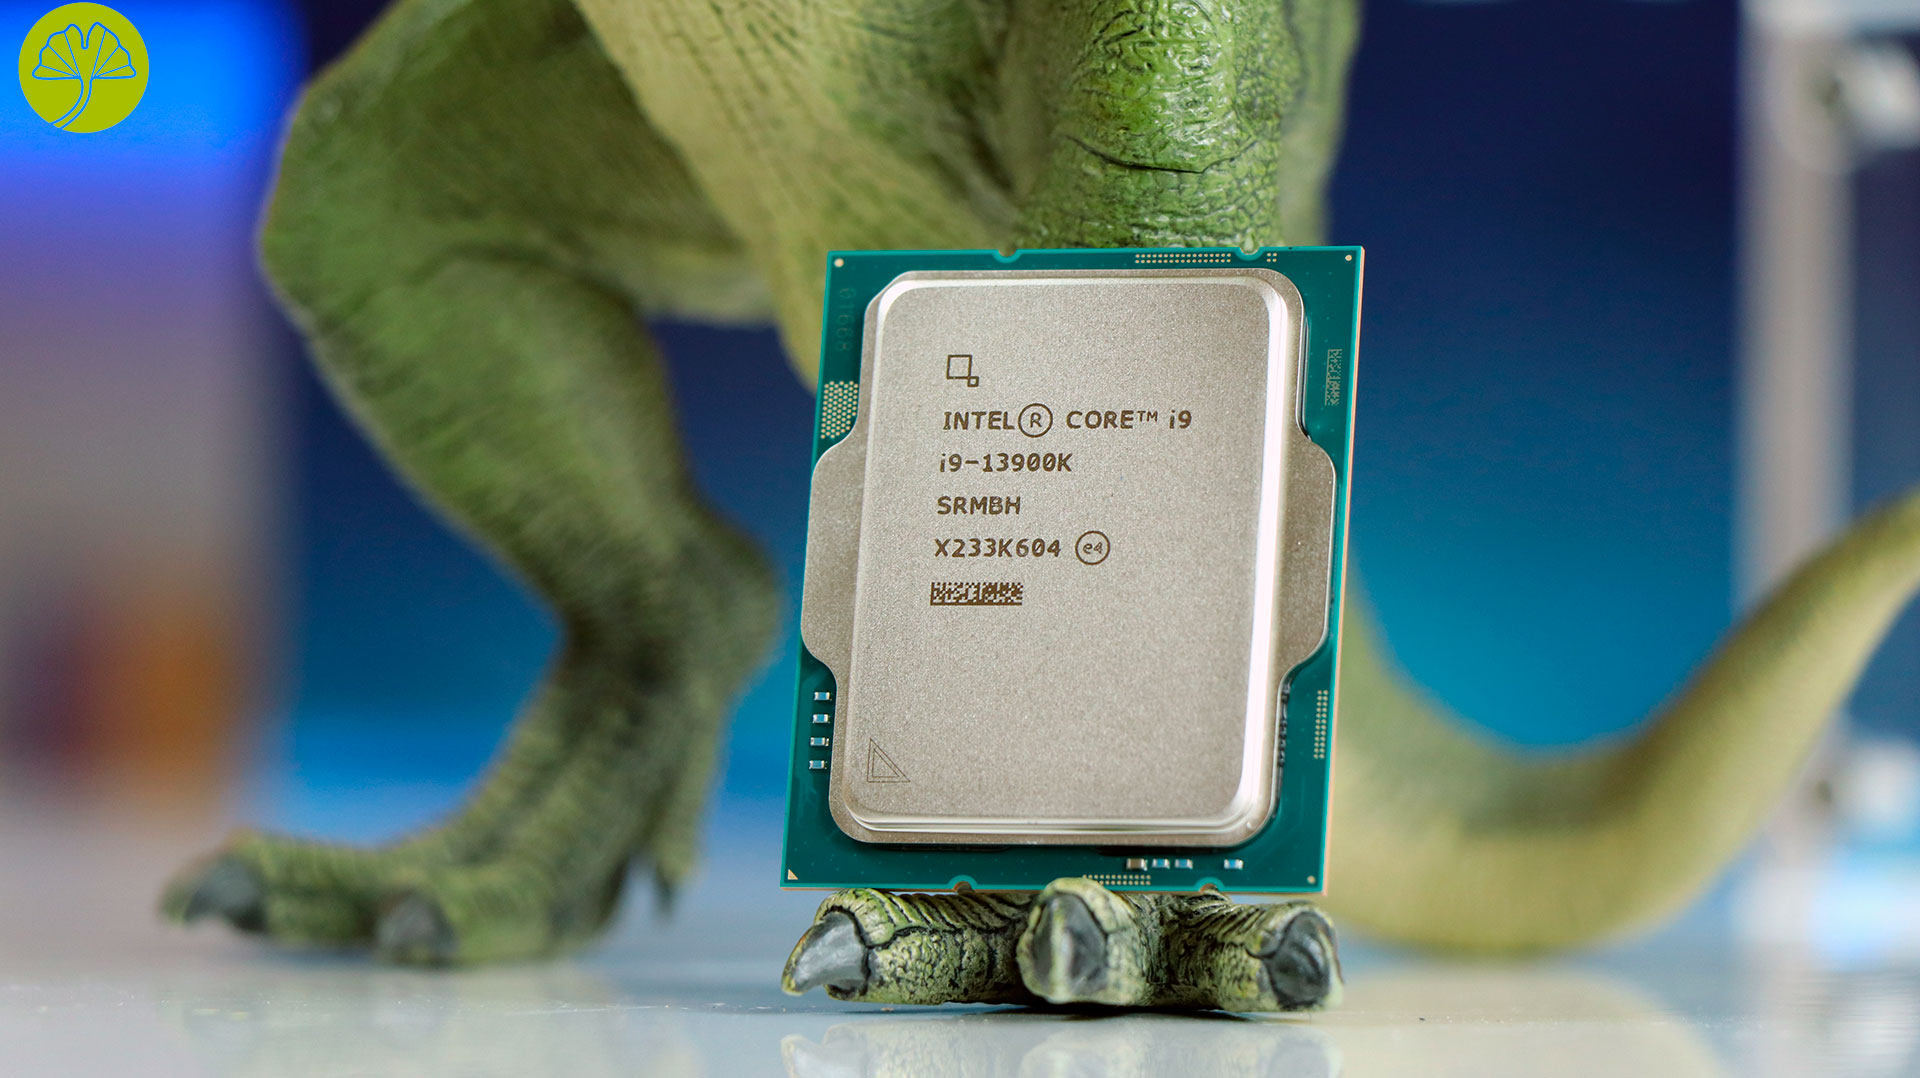 Processeur - Intel Core i7-14700KF